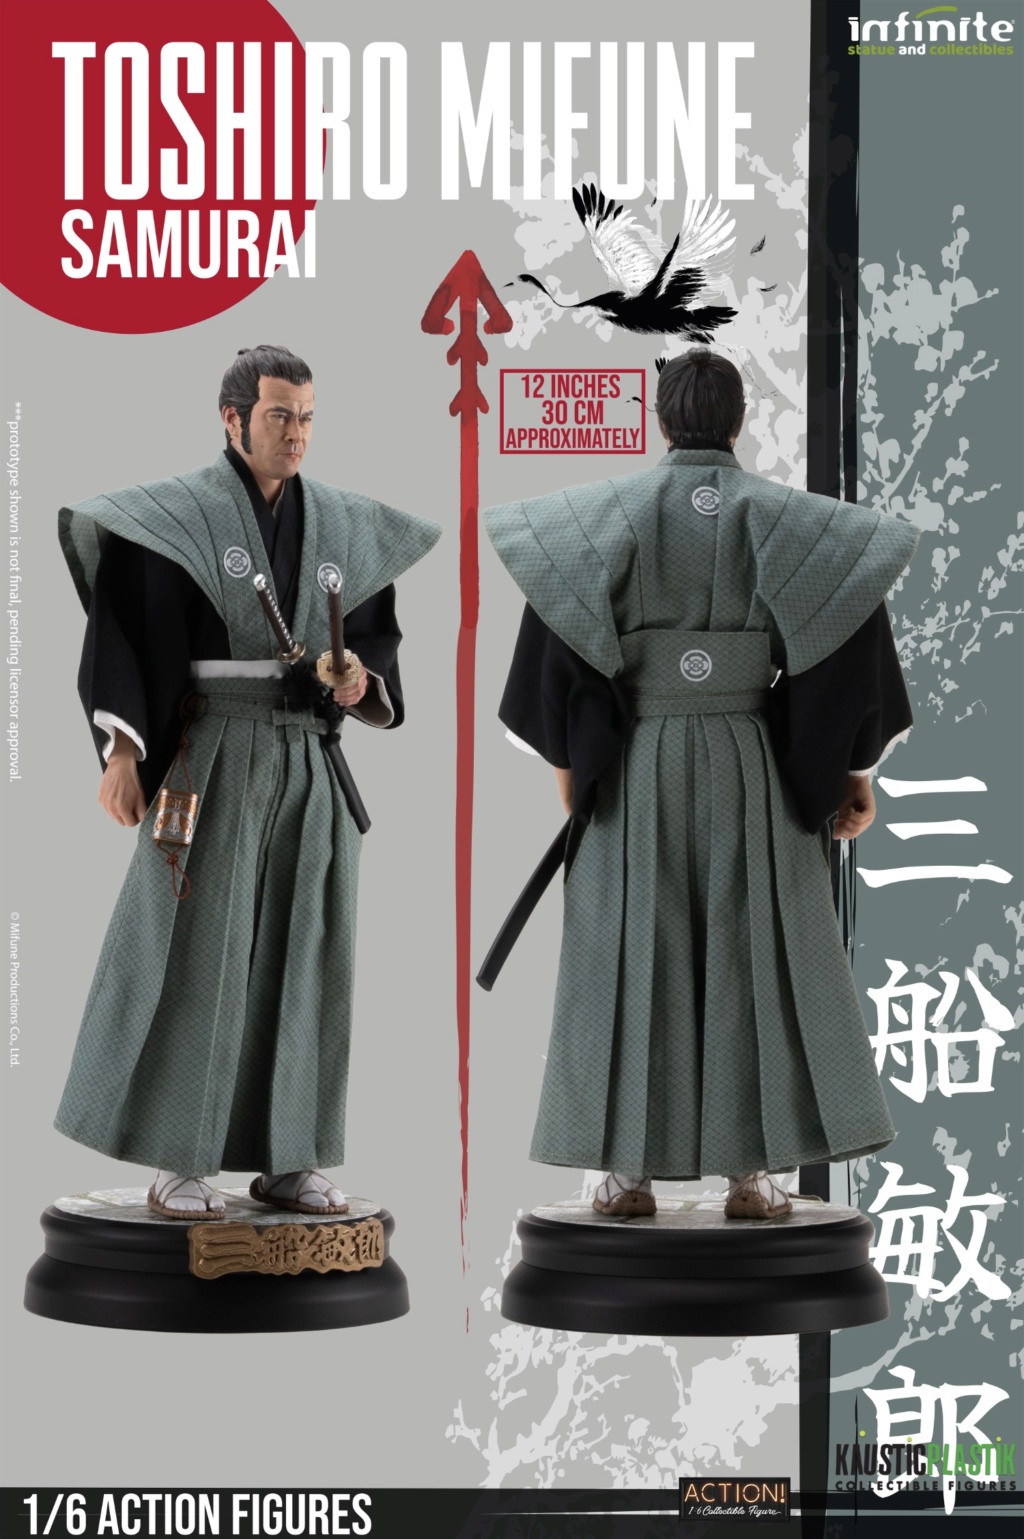 NEW PRODUCT: Infinite Statue & Kaustic Plastik: 1/6 scale TOSHIRO MIFUNE RONIN, SAMURAI & SAMURAI DELUXE DOUBLE PACK action figure 22510011